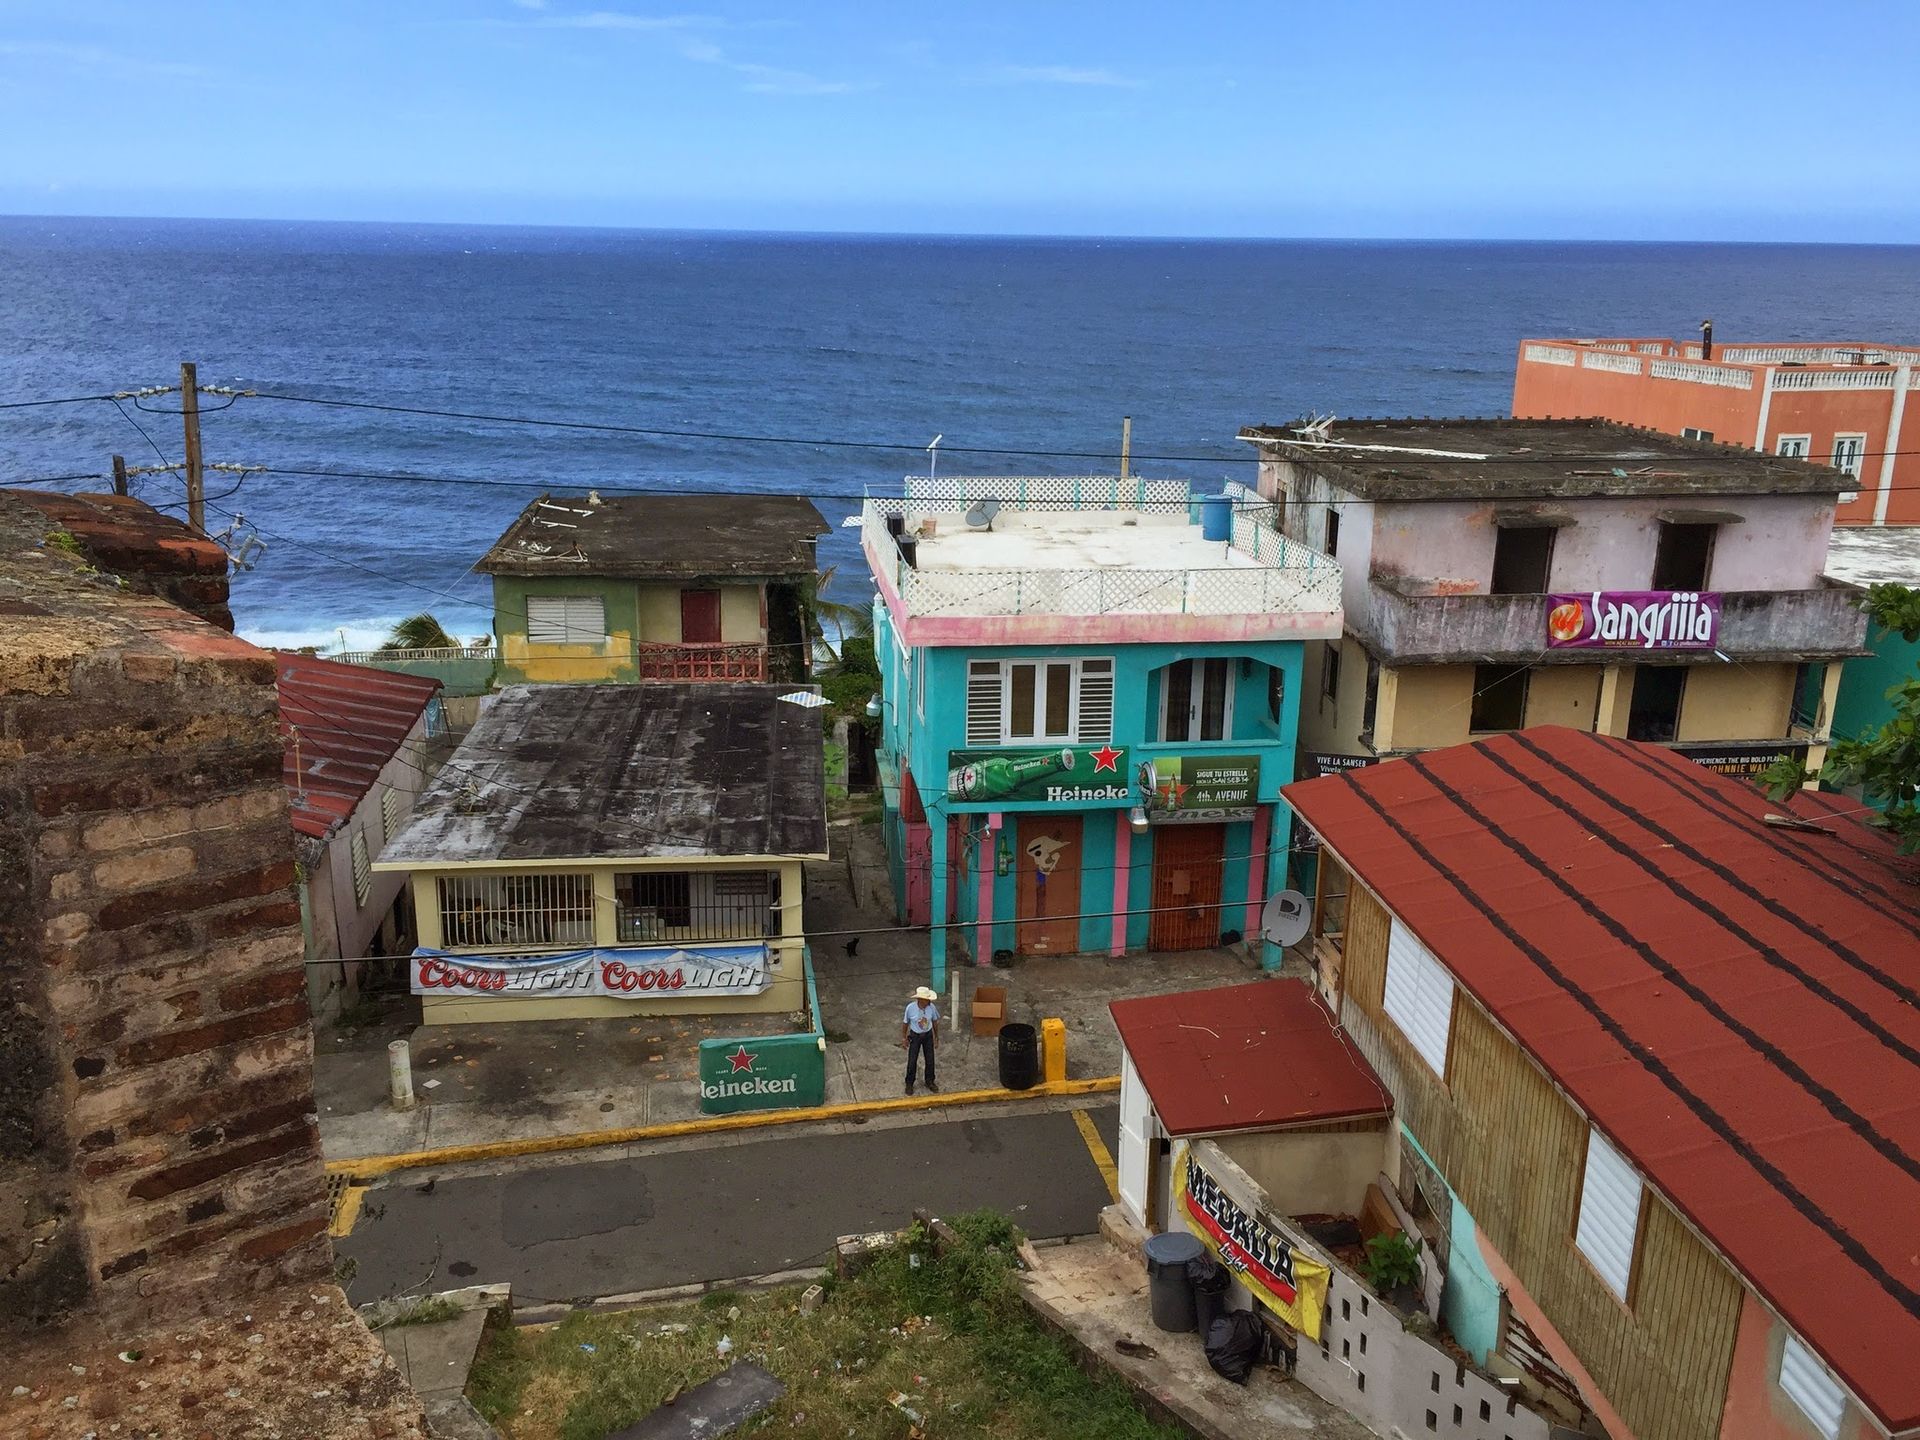 Guadeloupe coastal town